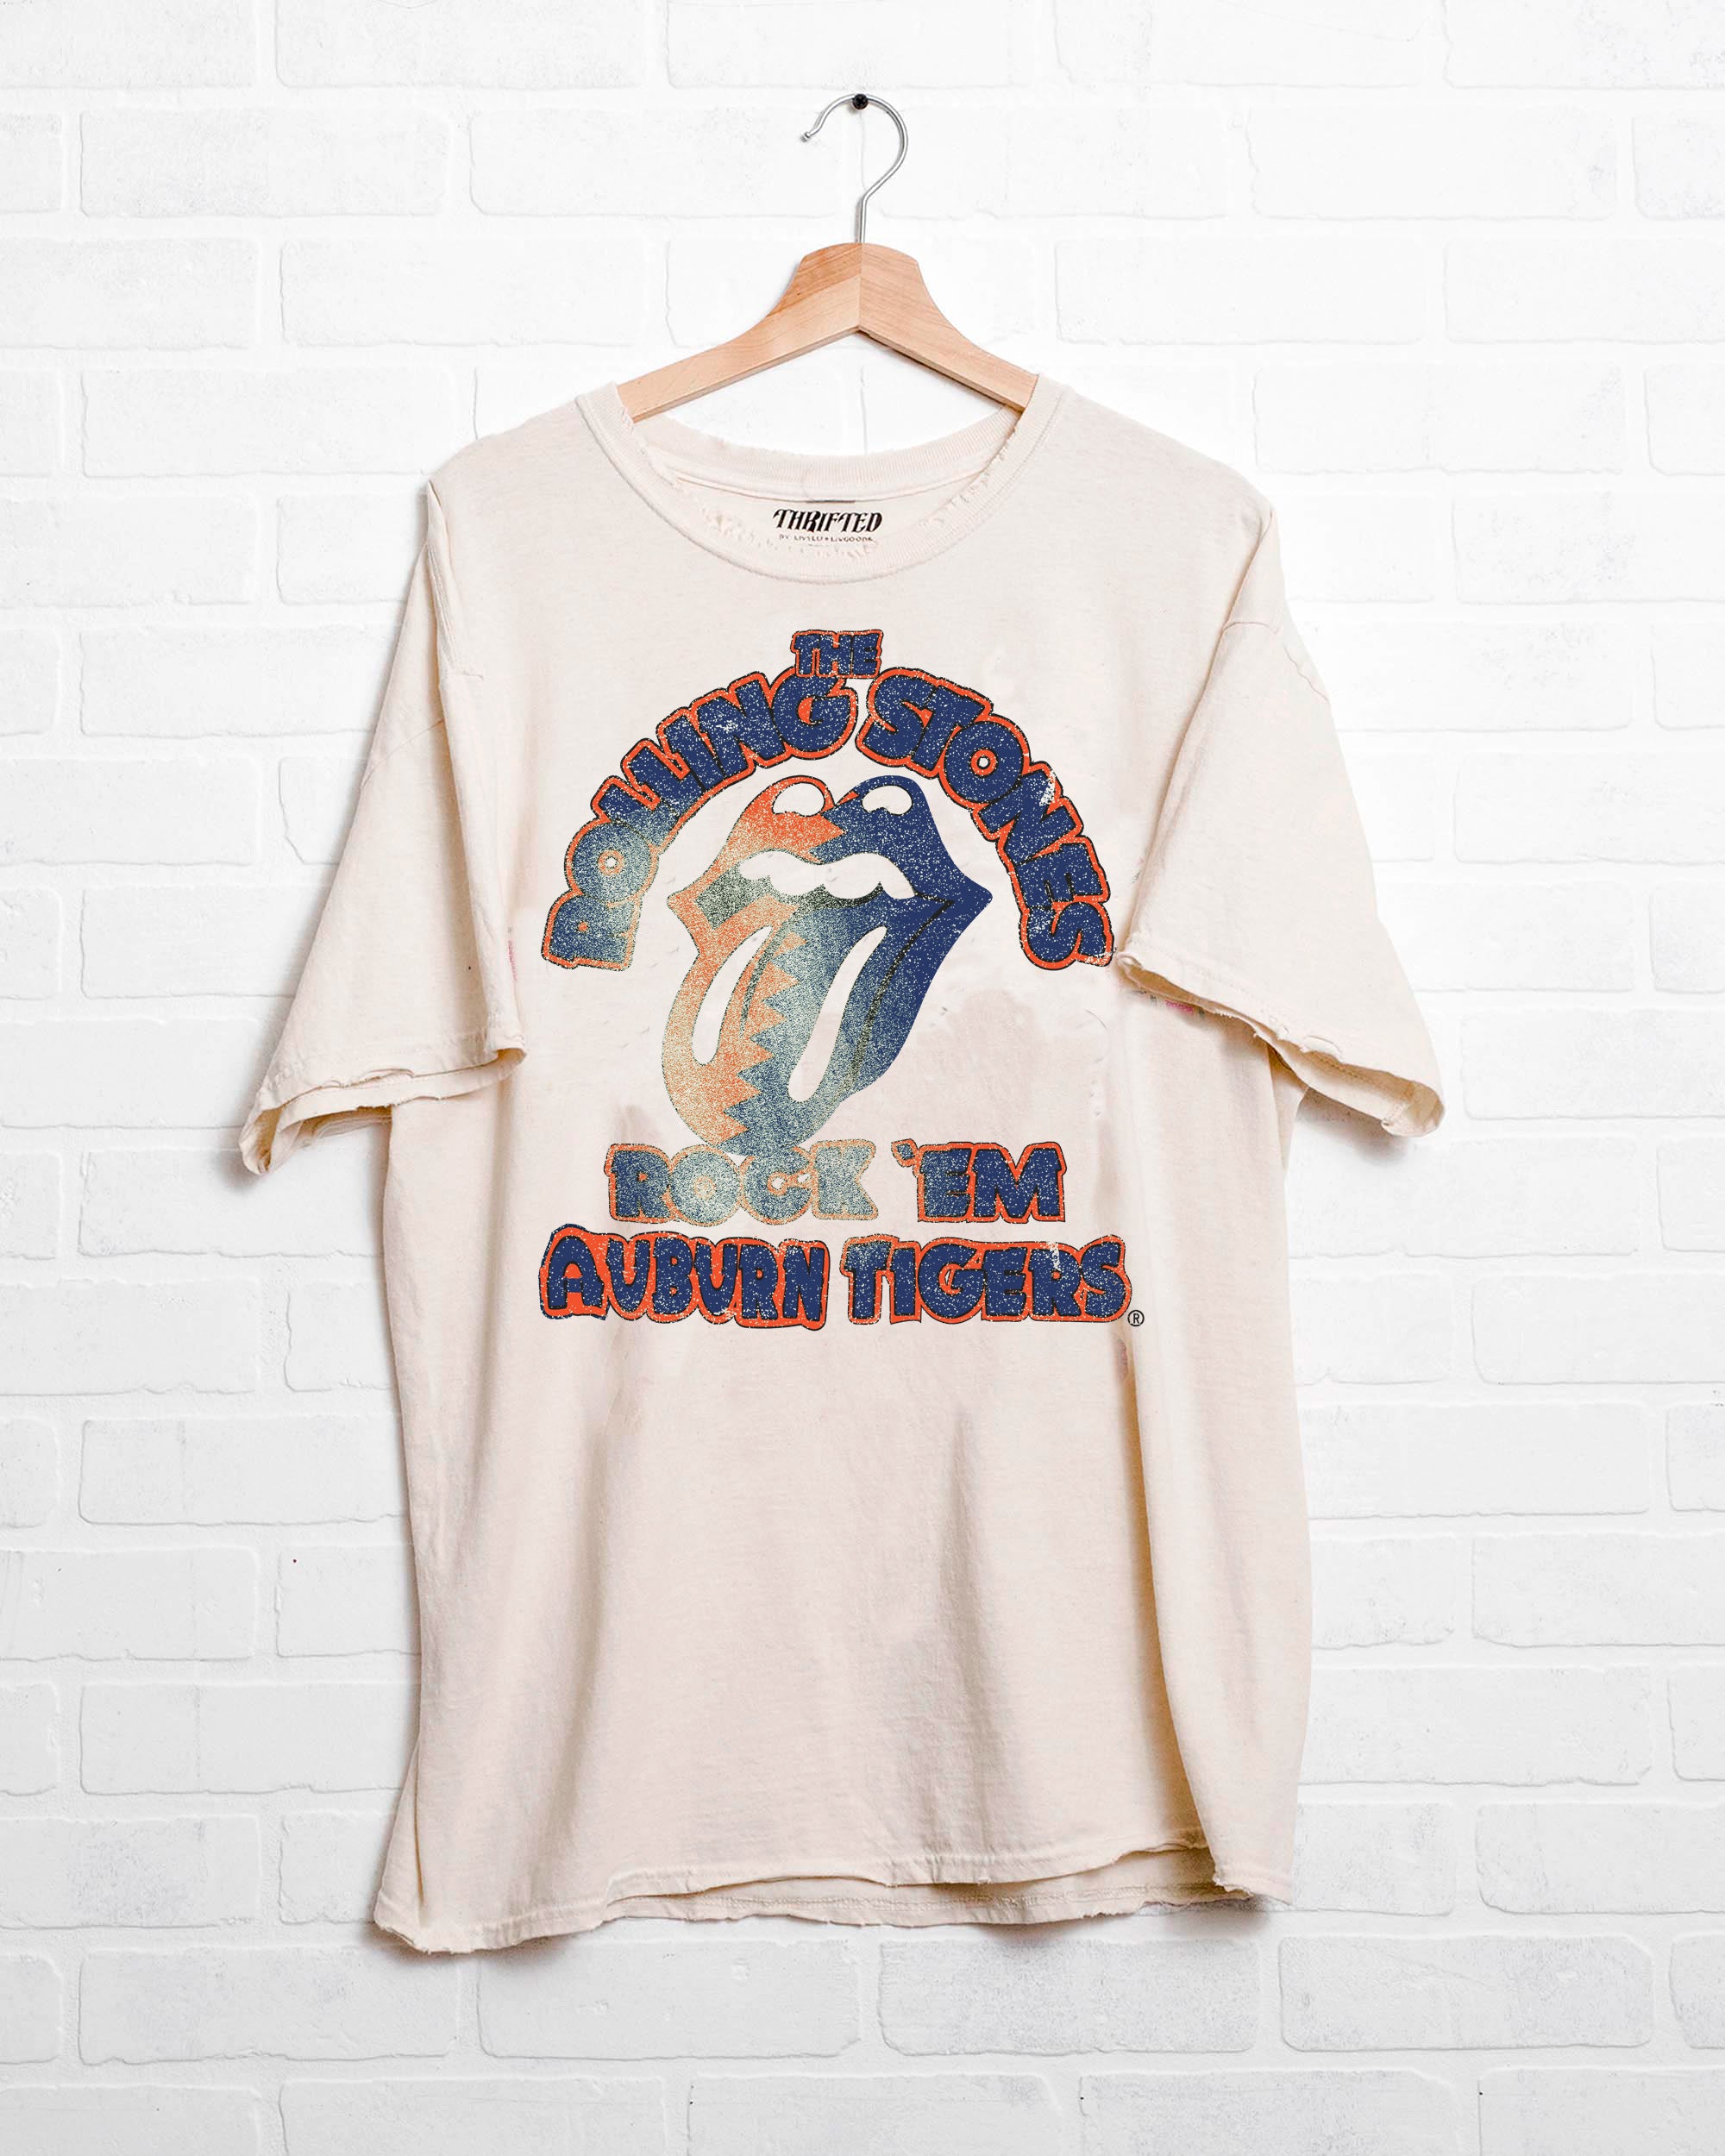 Rolling Stones Rock 'Em Auburn Tigers Off White Thrifted Tee - shoplivylu